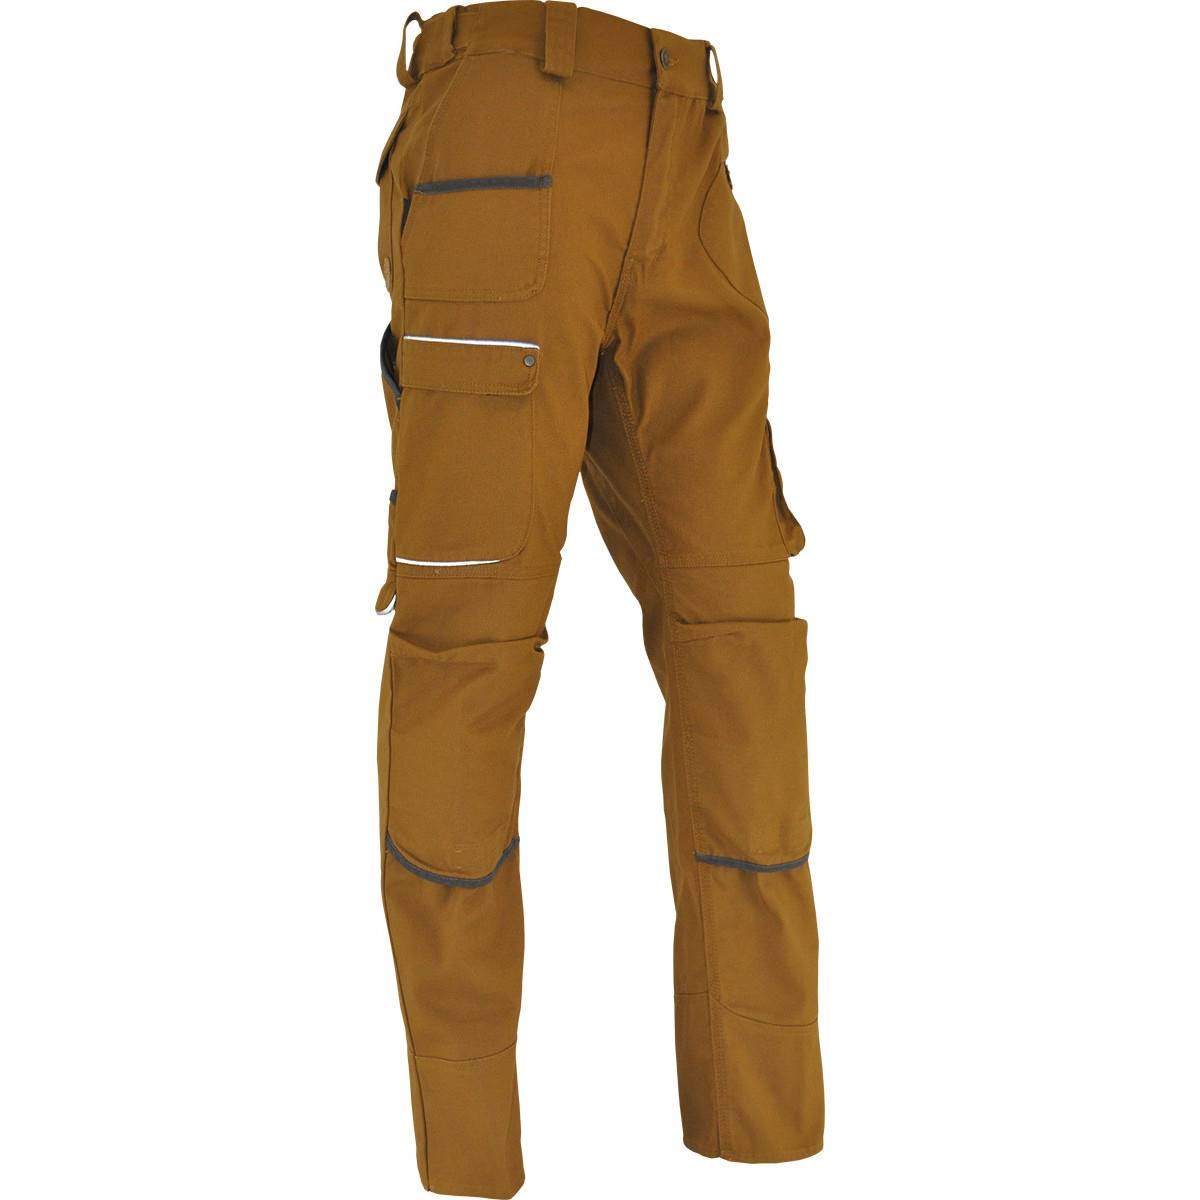 SAHARA work trousers size 40, bronze